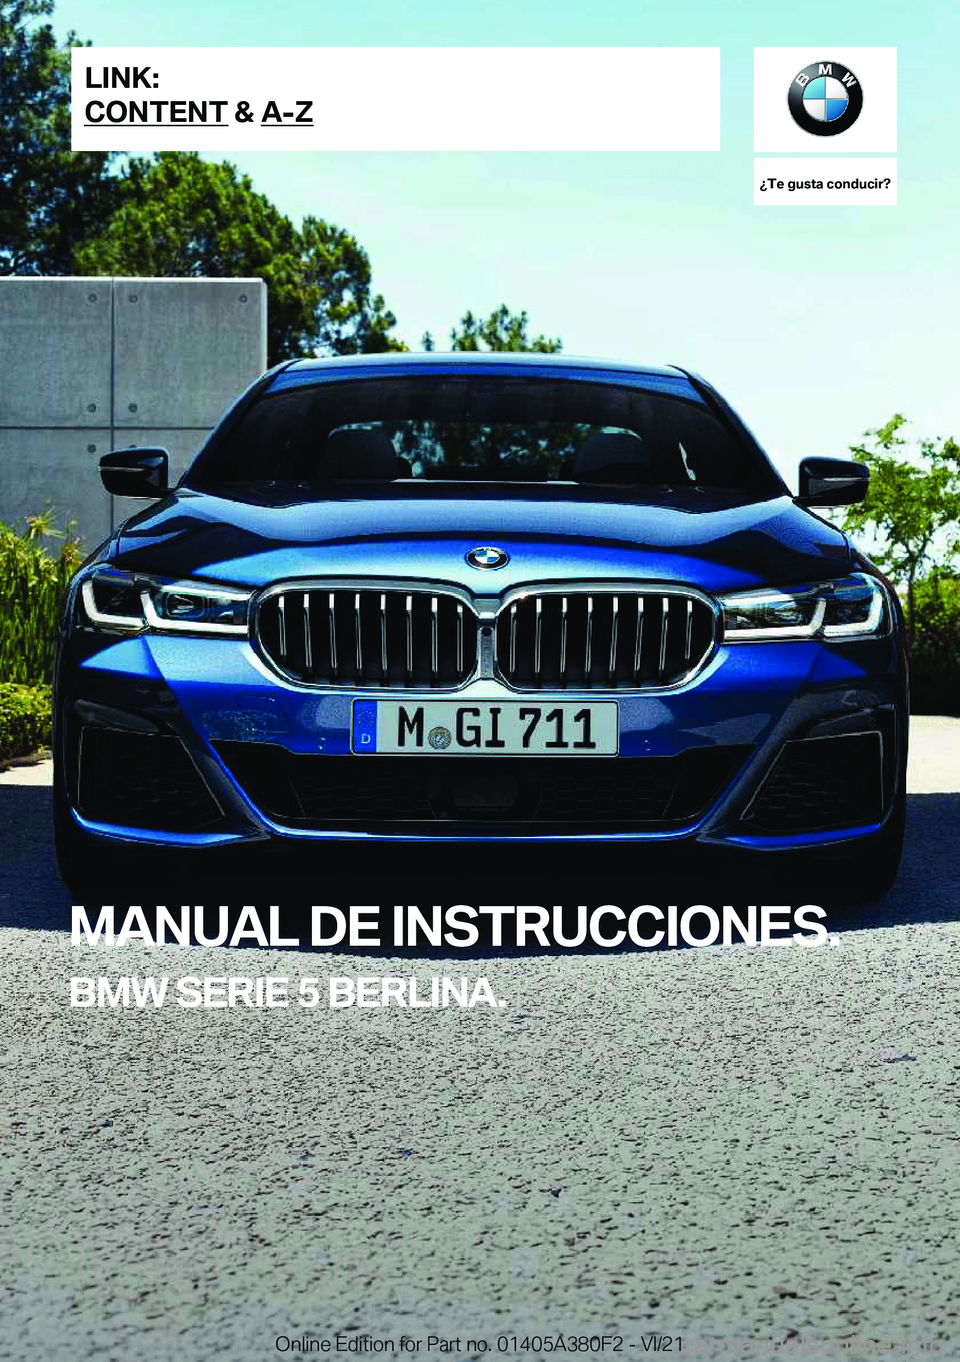 BMW 5 SERIES 2022  Manuales de Empleo (in Spanish) ��T�e��g�u�s�t�a��c�o�n�d�u�c�i�r� 
�M�A�N�U�A�L��D�E��I�N�S�T�R�U�C�C�I�O�N�E�S�.
�B�M�W��S�E�R�I�E��5��B�E�R�L�I�N�A�.�L�I�N�K�:
�C�O�N�T�E�N�T��&��A�-�Z�O�n�l�i�n�e��E�d�i�t�i�o�n��f�o�